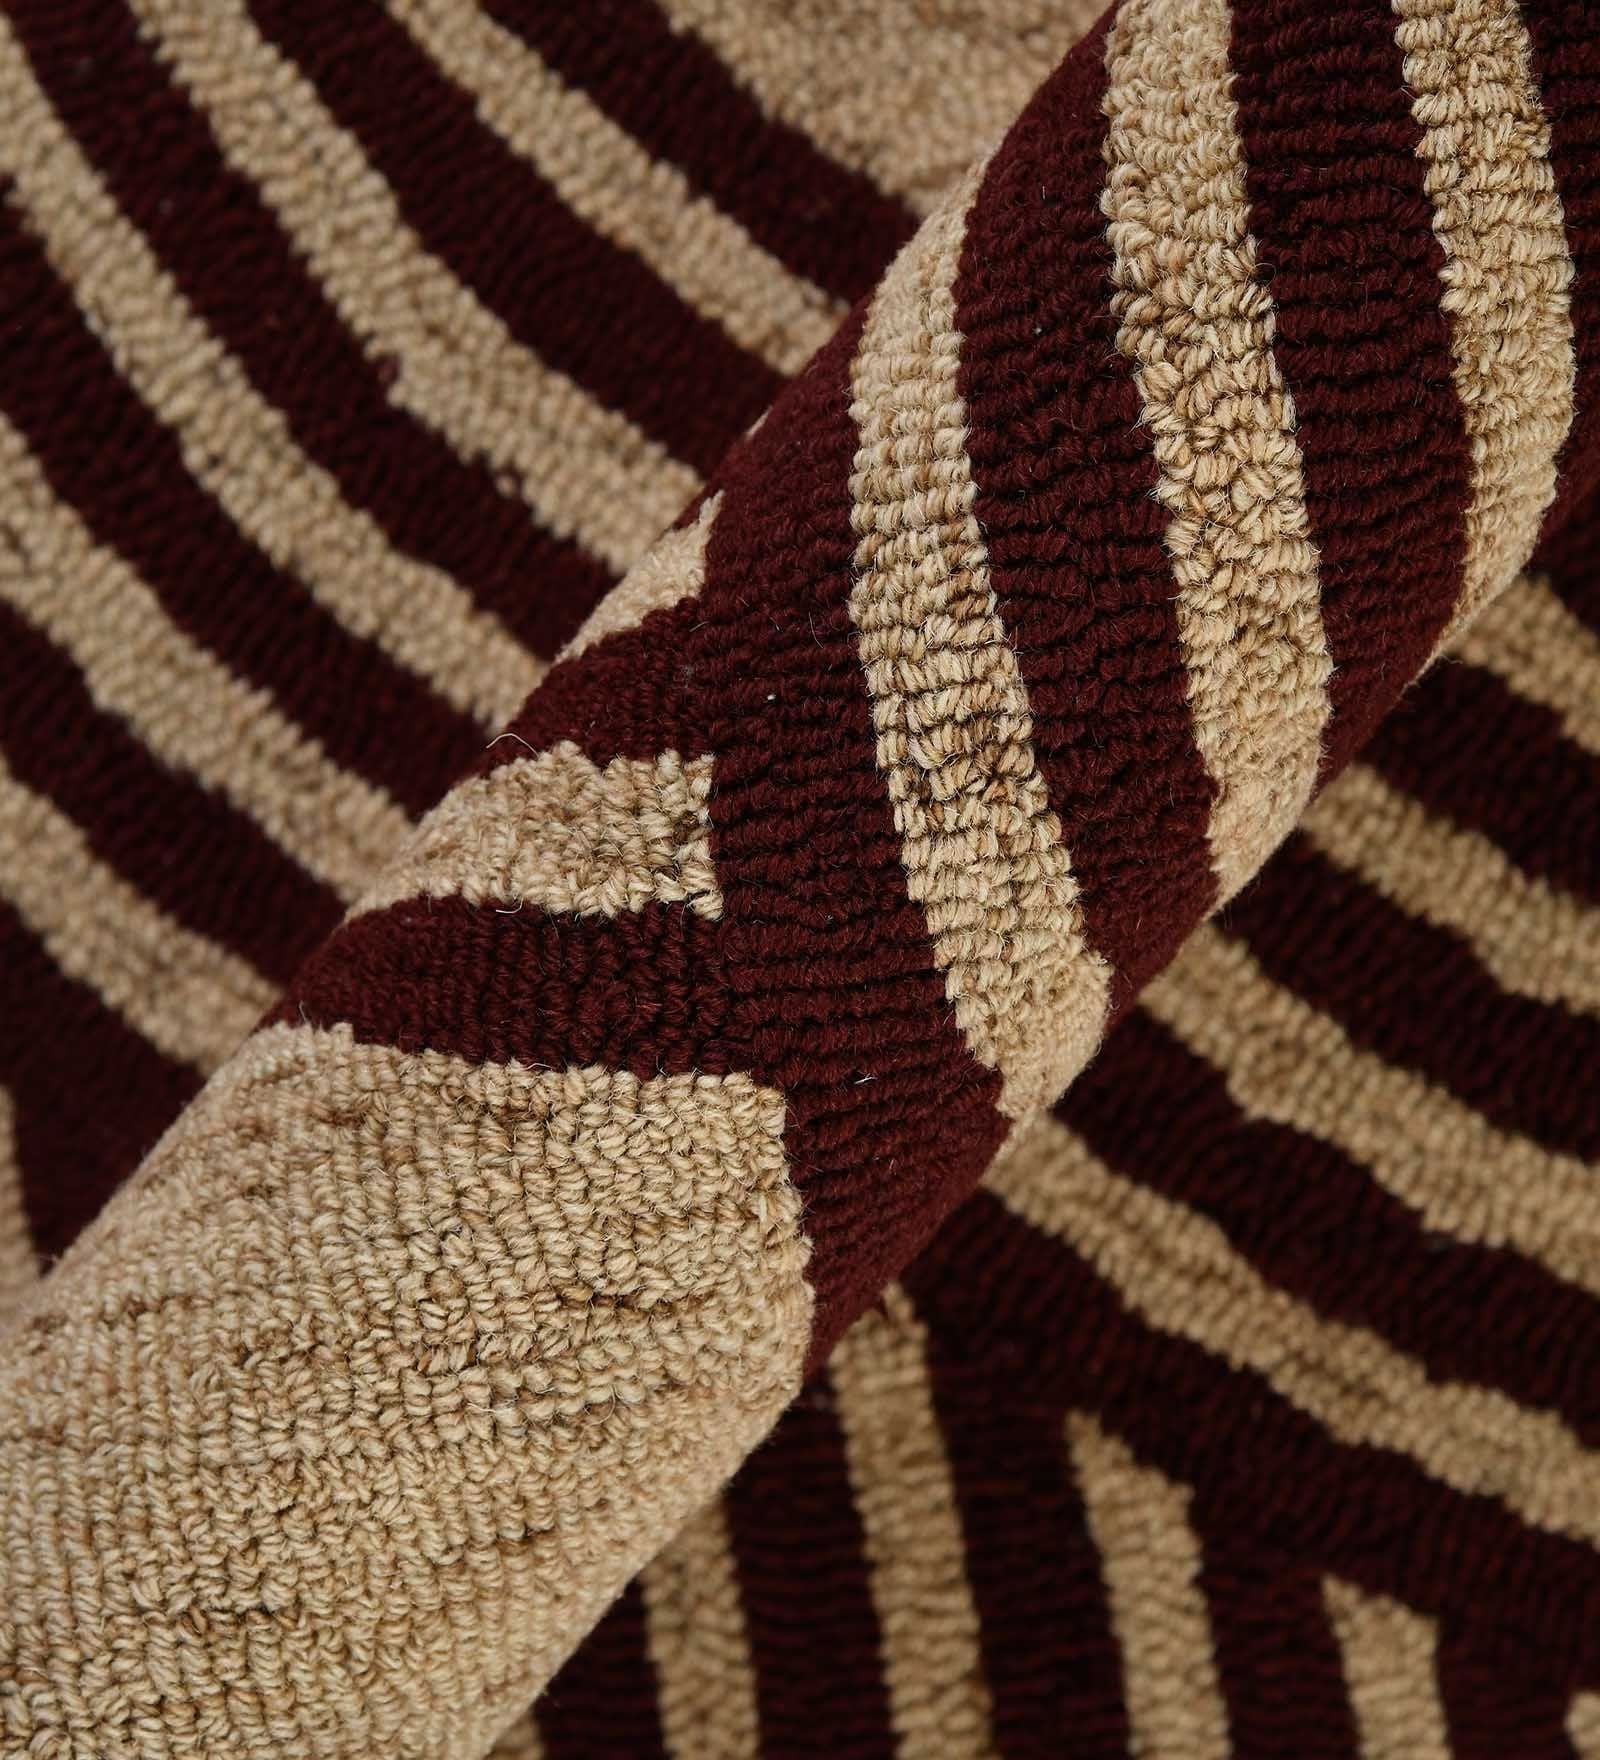 RED ROBIN Wool & Viscose Canyan 8x10 Feet  Hand-Tufted Carpet - Rug